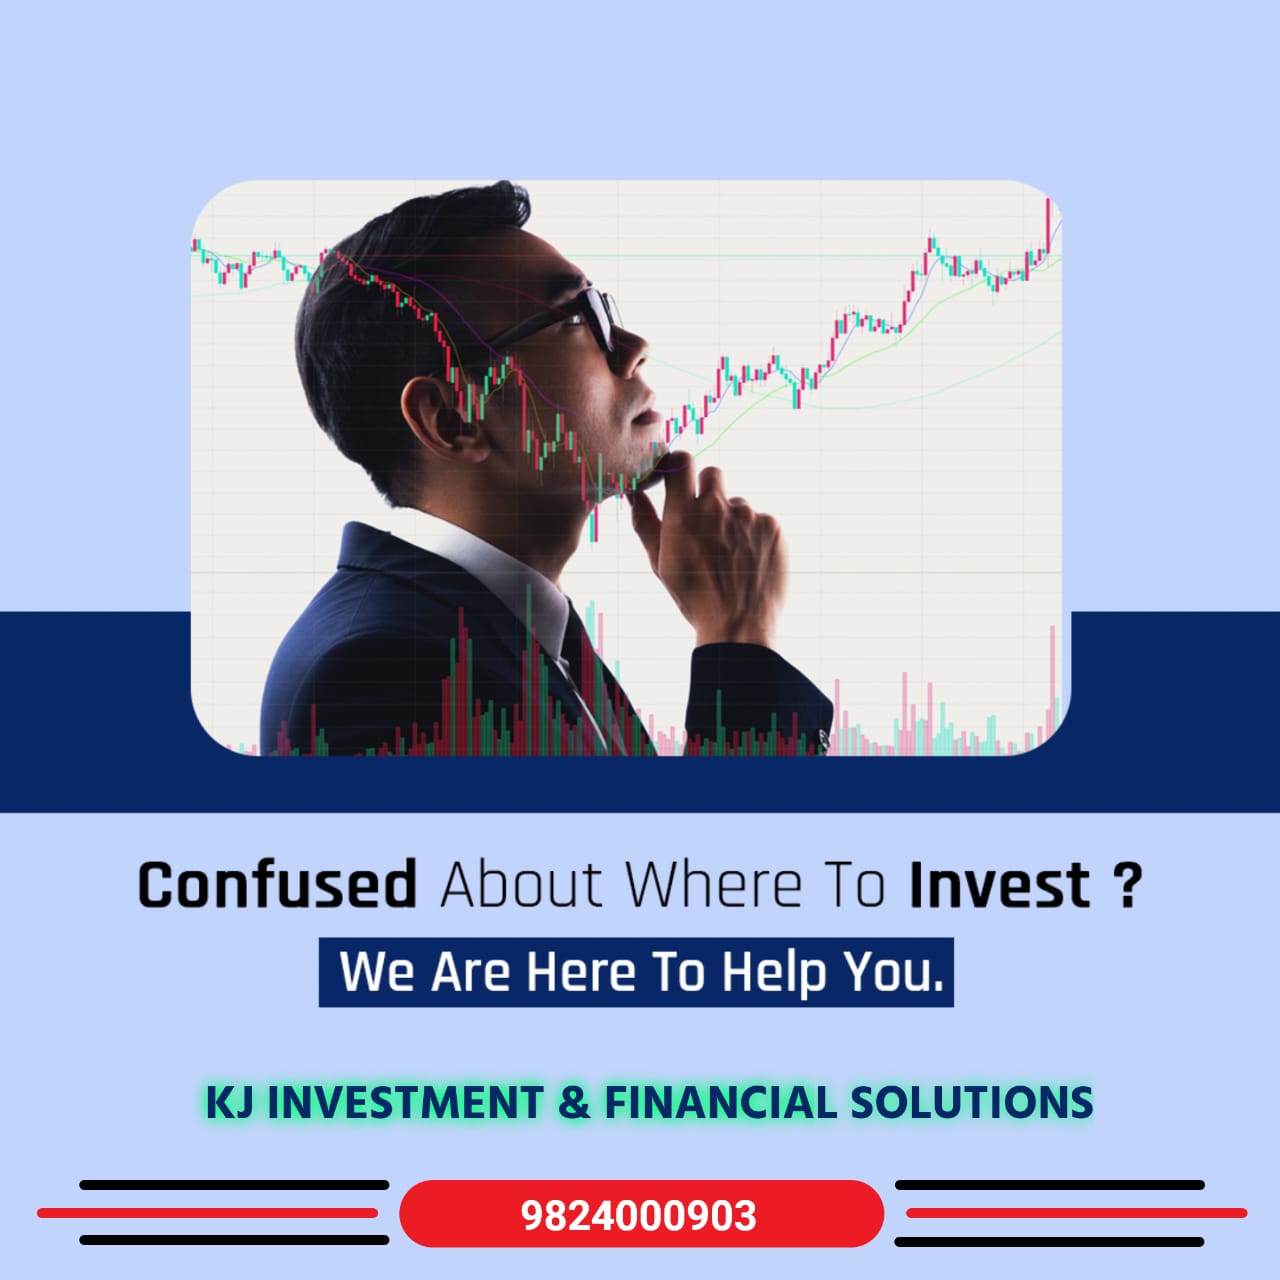 KJ - Finance and Investment